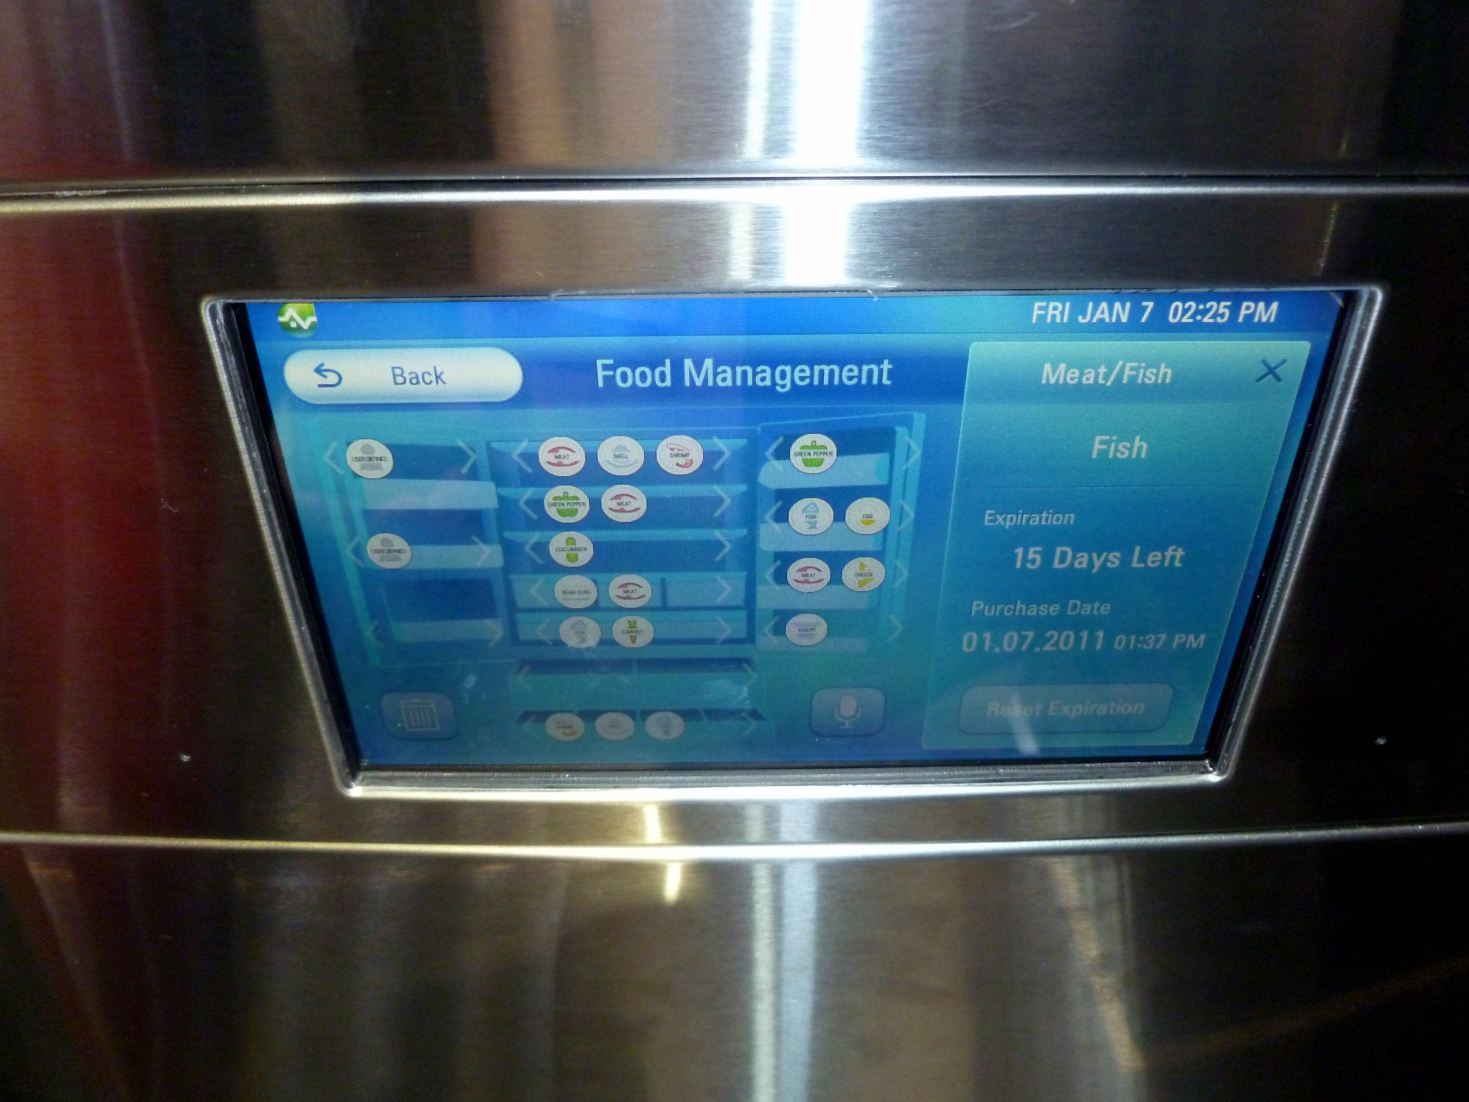 LG_Smart_Refrigerator_at_CES_2011_nowat